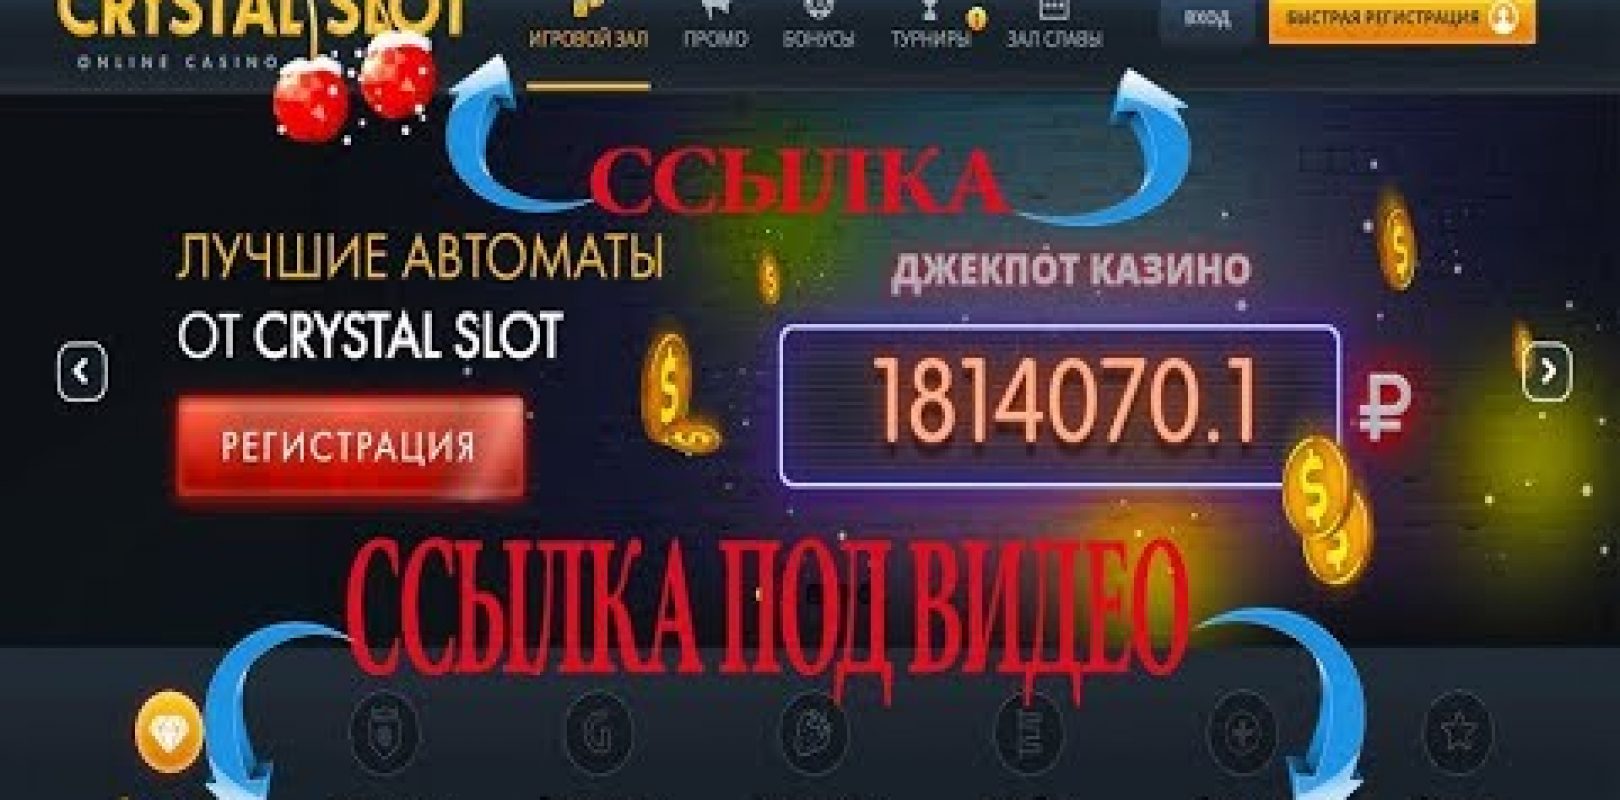 Free slot machine gambling